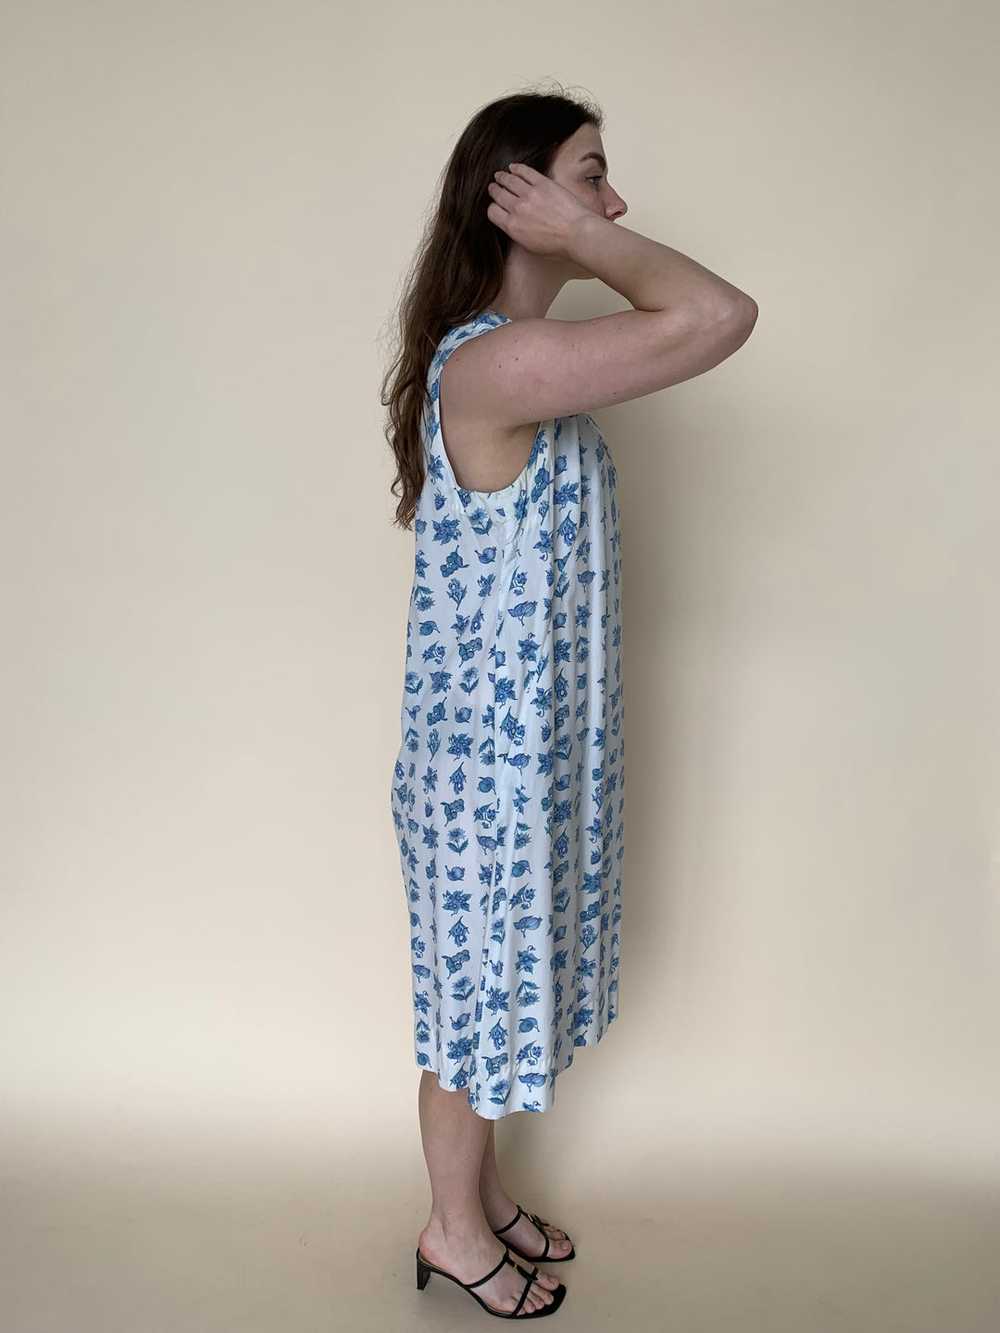 Blueberry print vintage dress - image 3